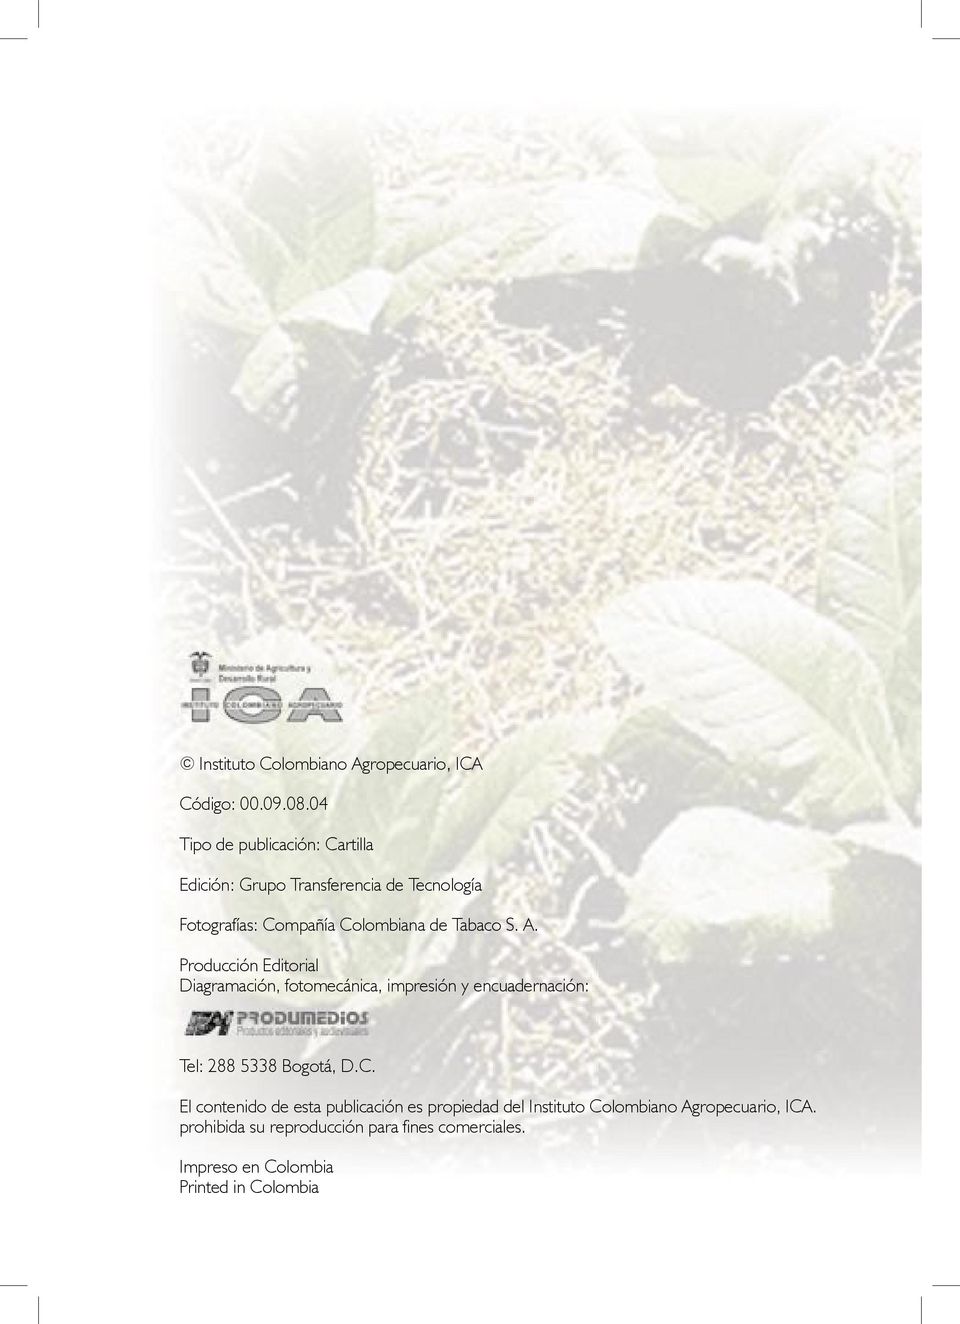 Tabaco S. A. Producción Editorial Diagramación, fotomecánica, impresión y encuadernación: Tel: 288 5338 Bogotá, D.C.